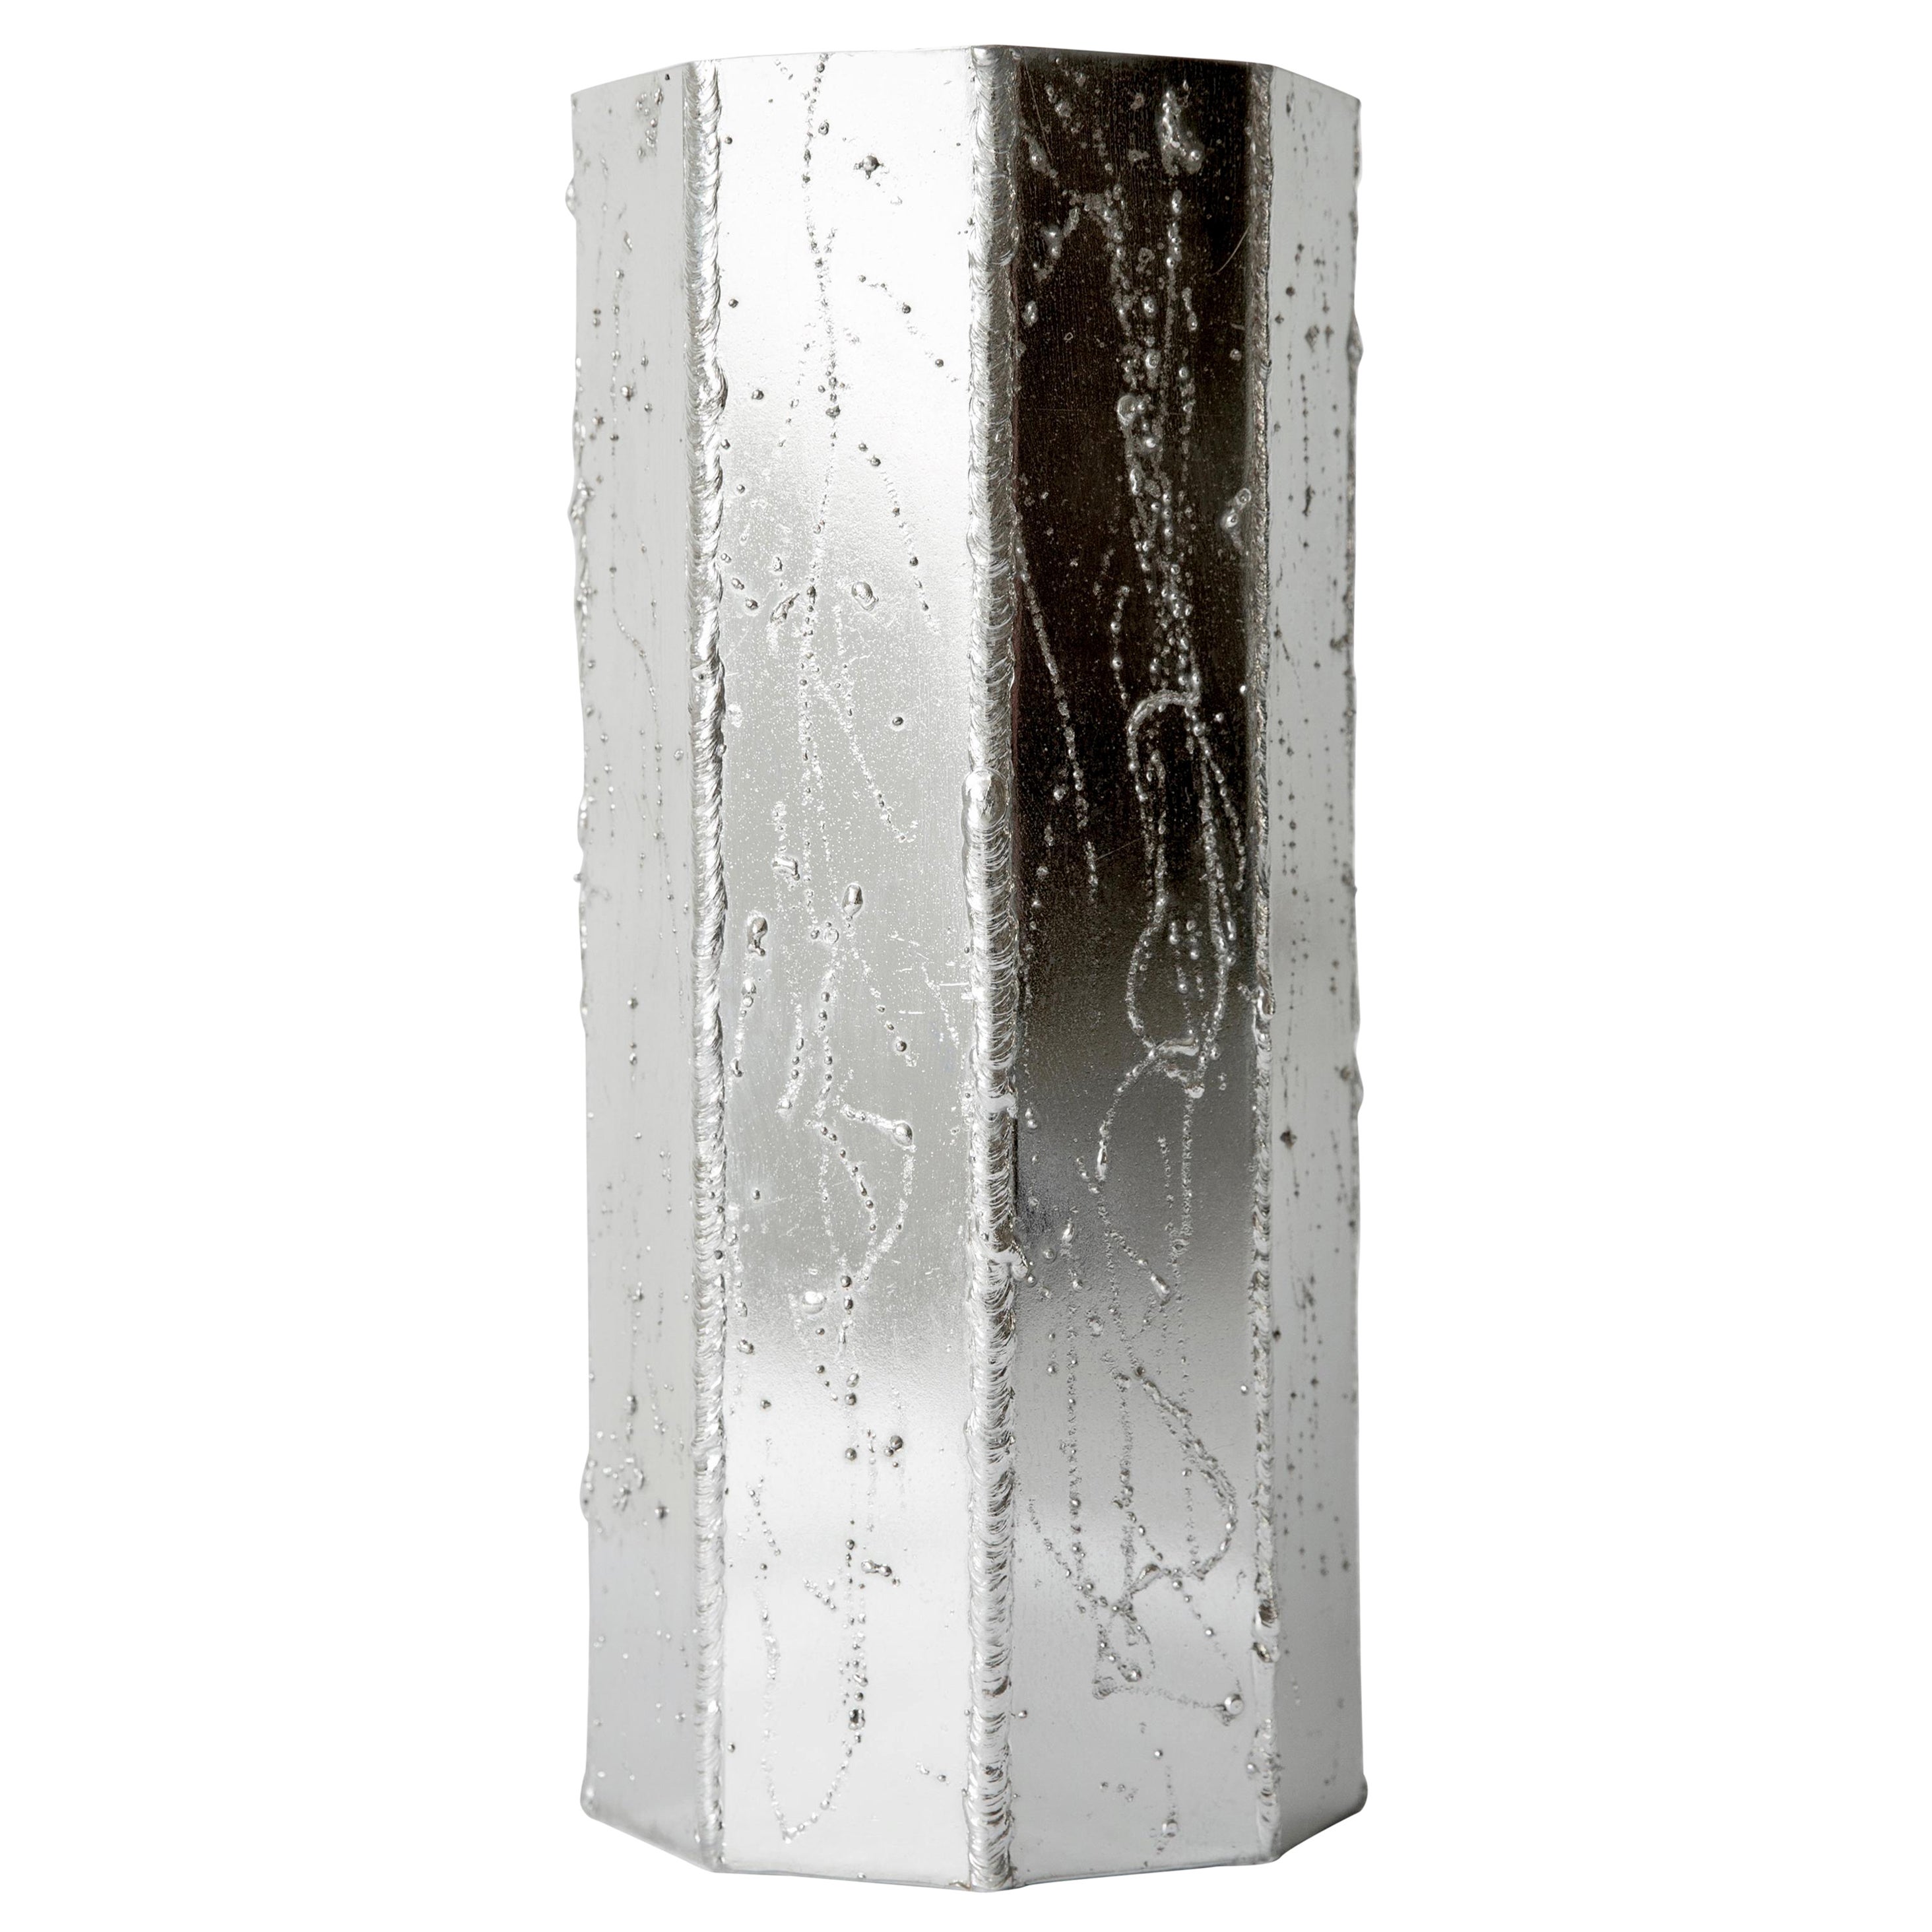 Chrome-Plated Metal Vase by Disciplina Studio